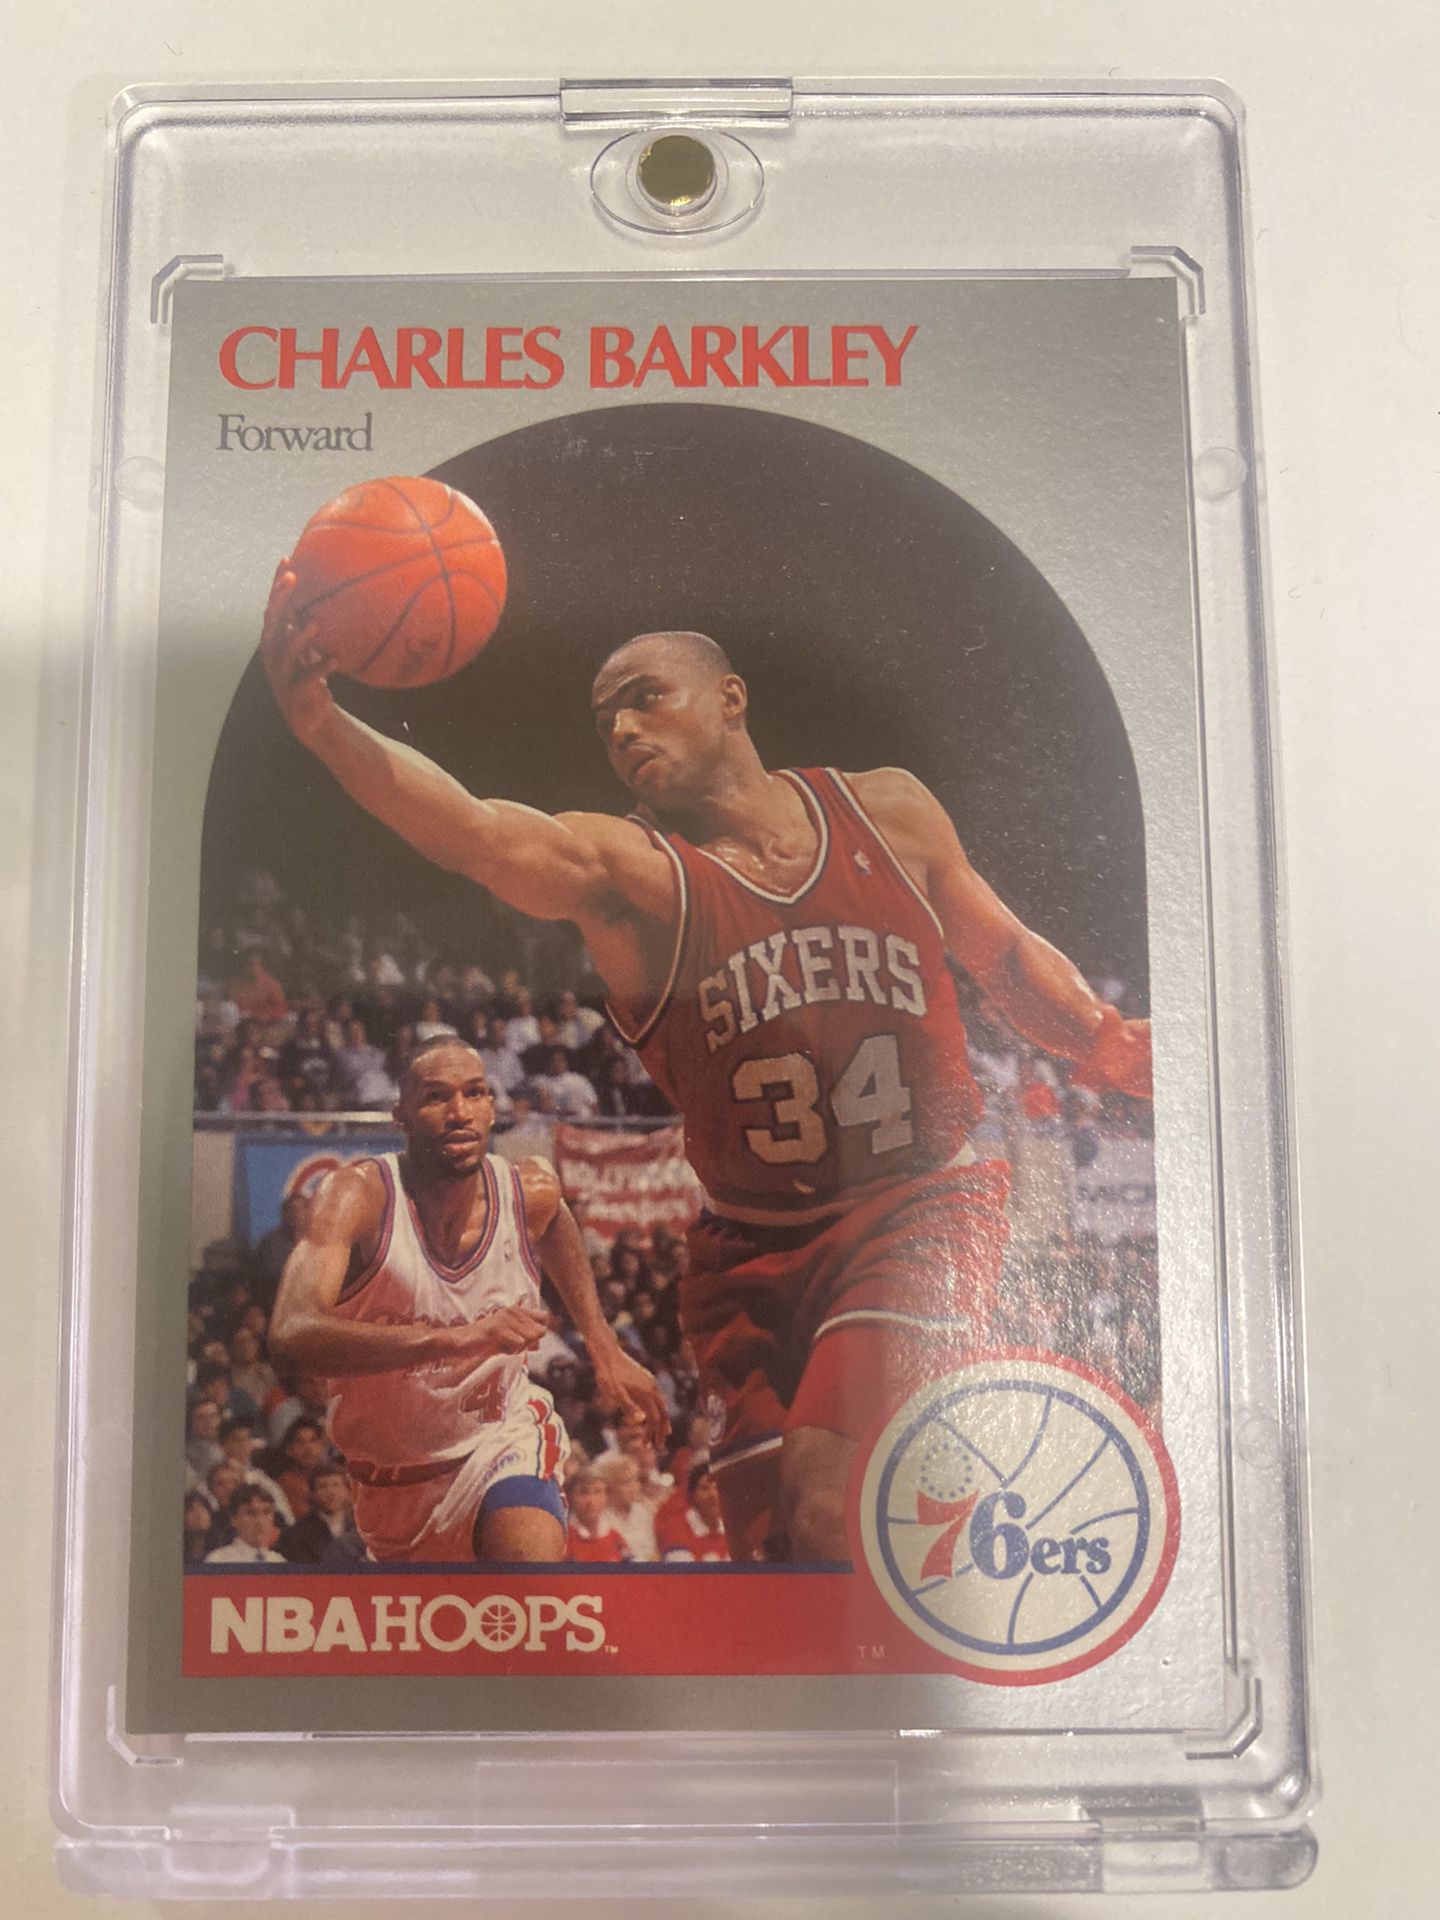 Charles Barkley 1990 NBA hoops 